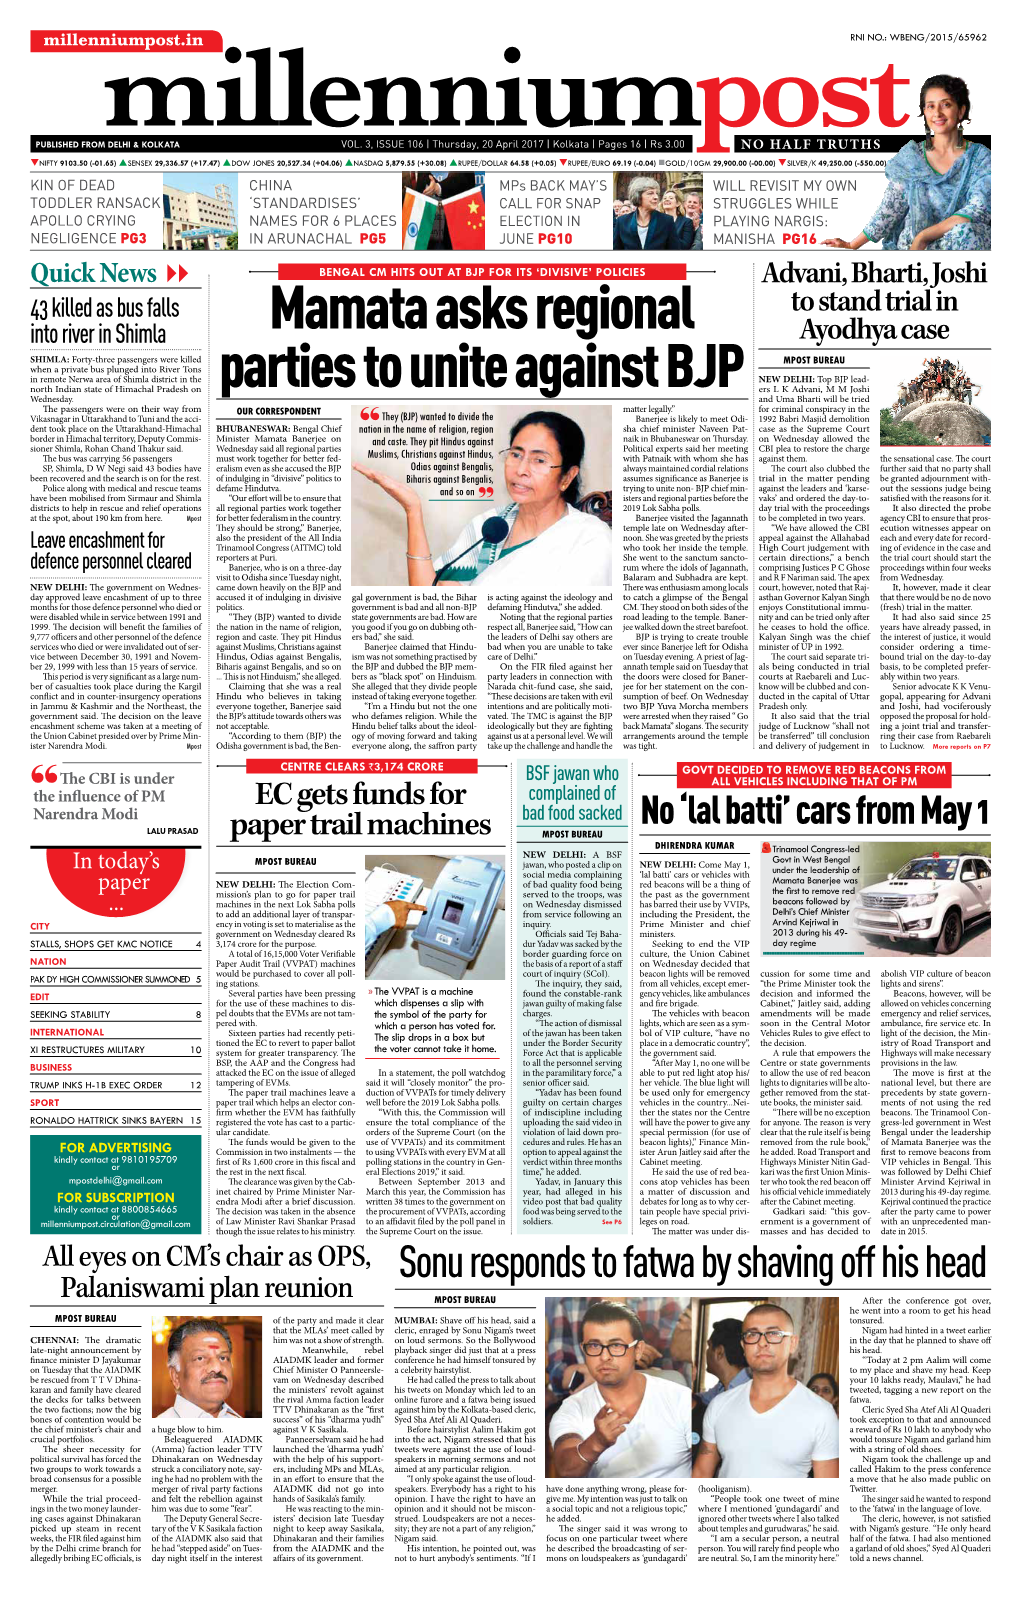 Mamata Asks Regional Parties to Unite Against